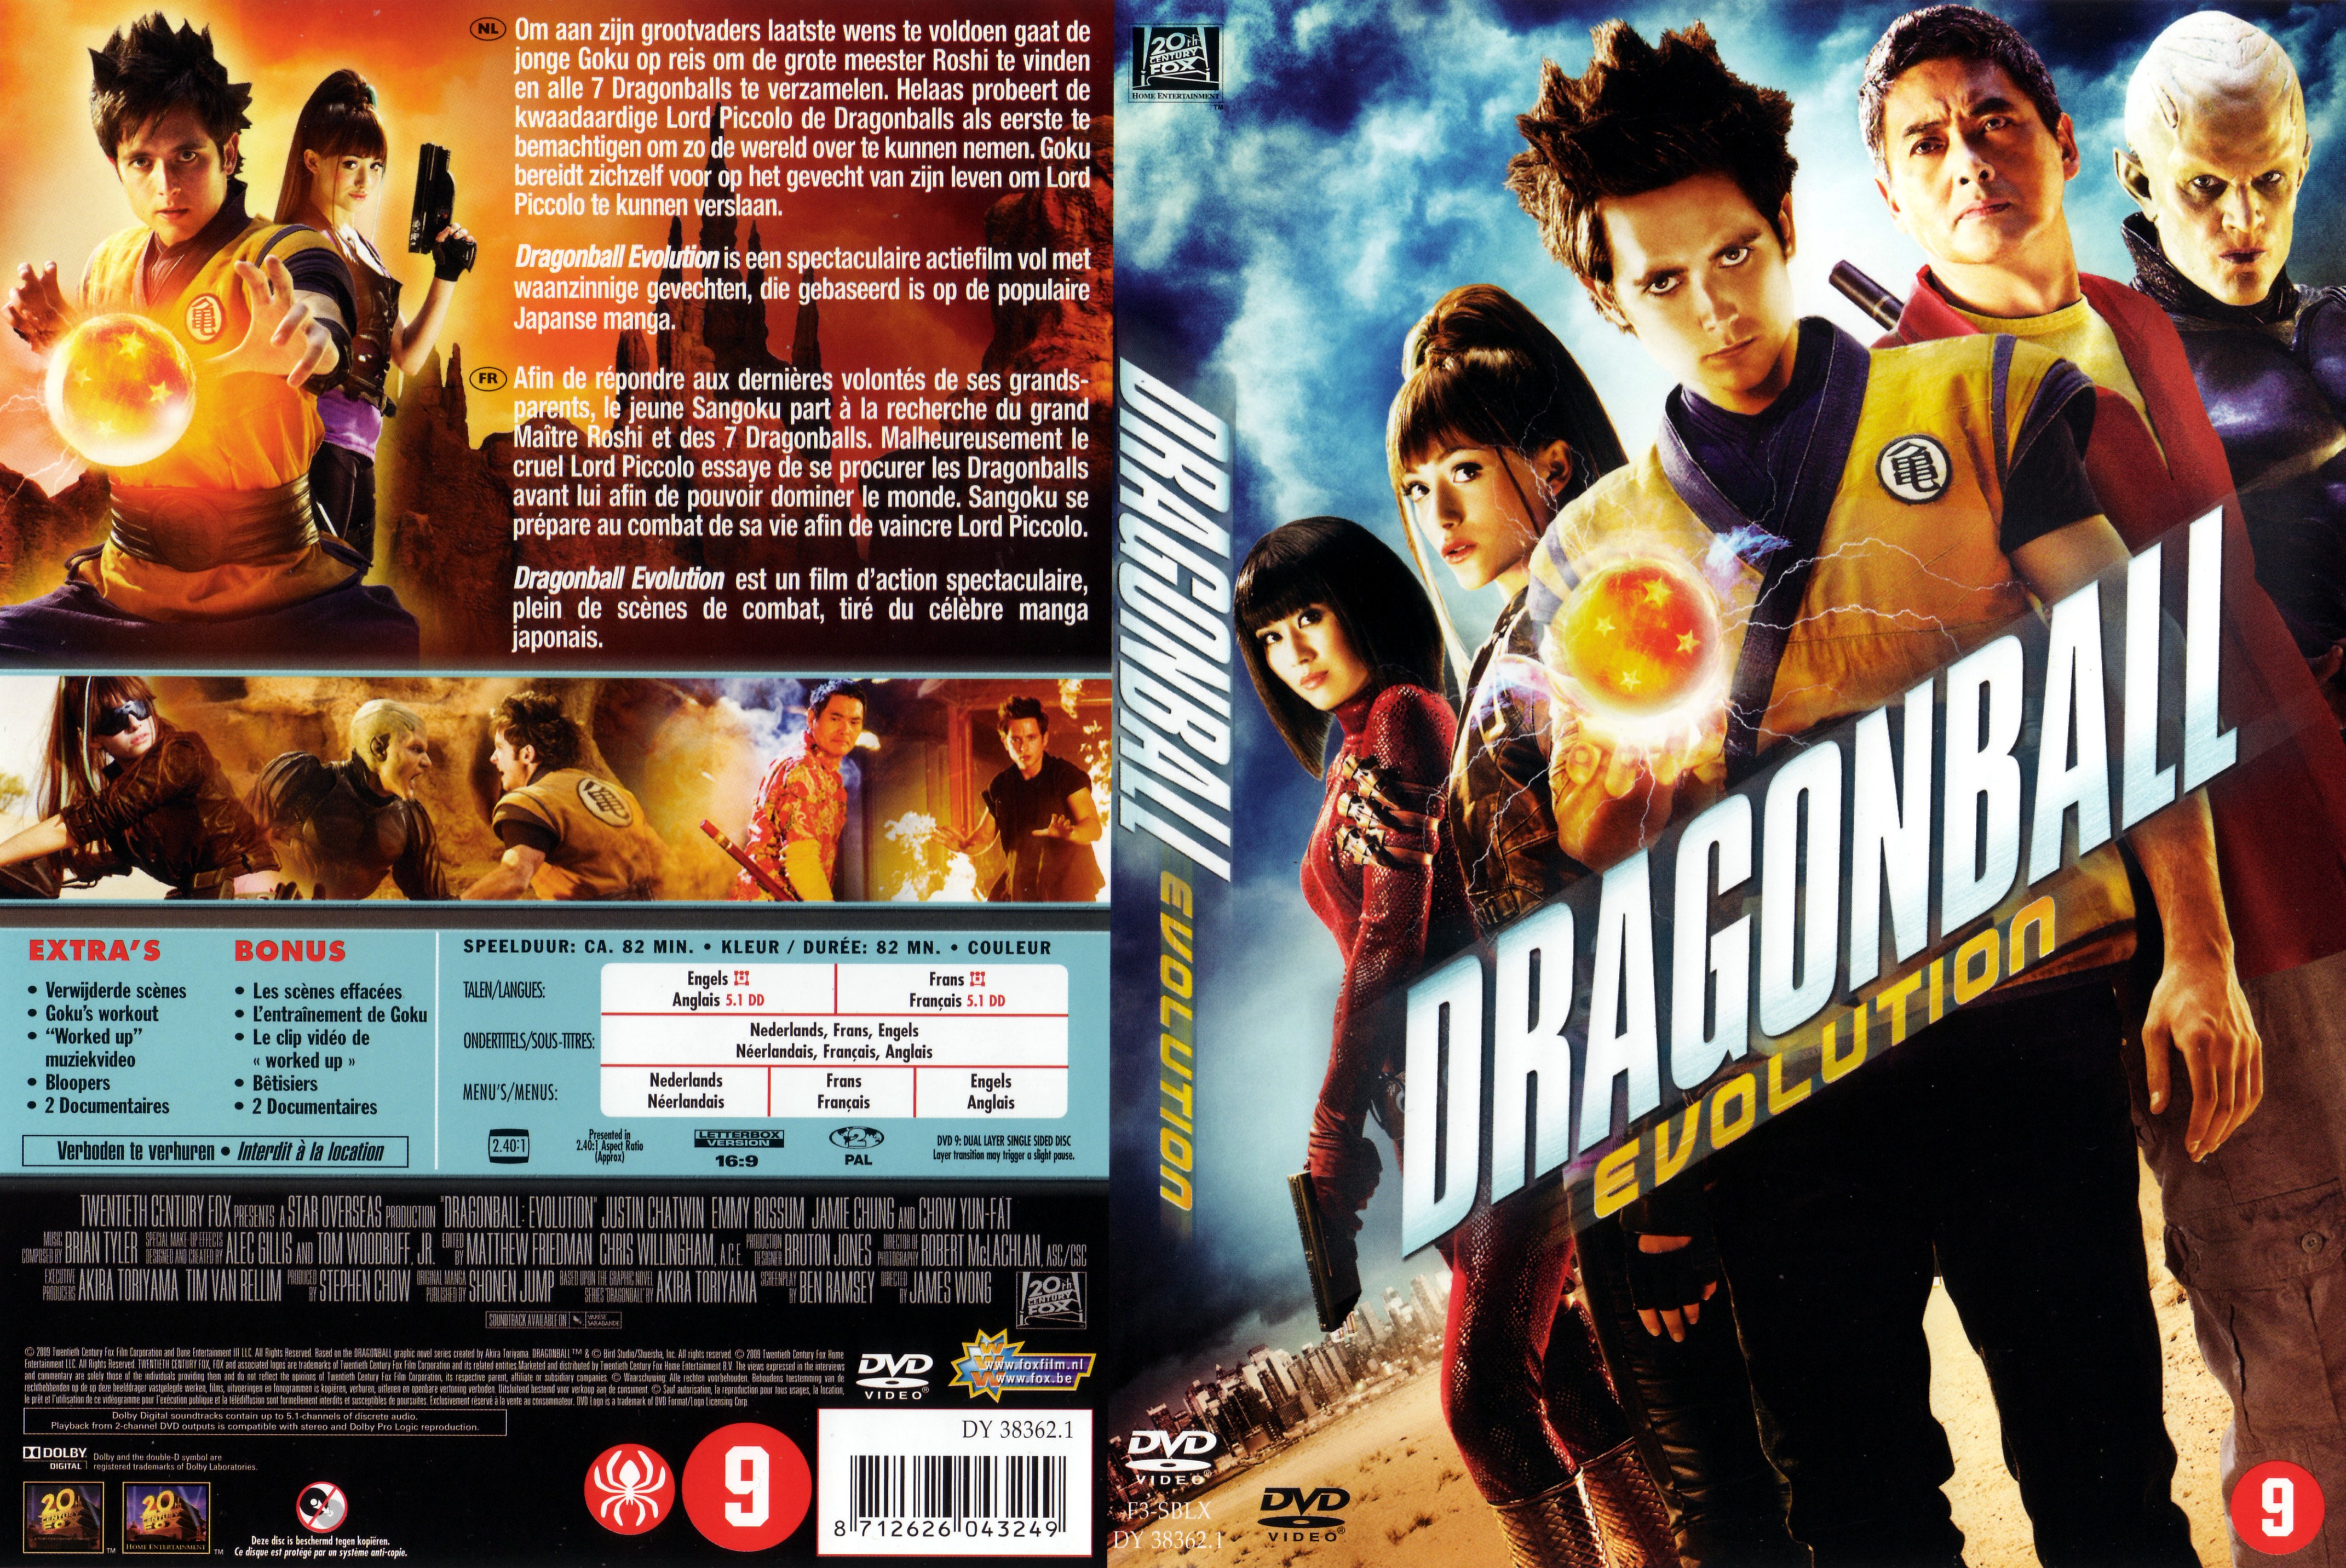 Jaquette DVD Dragonball evolution v2